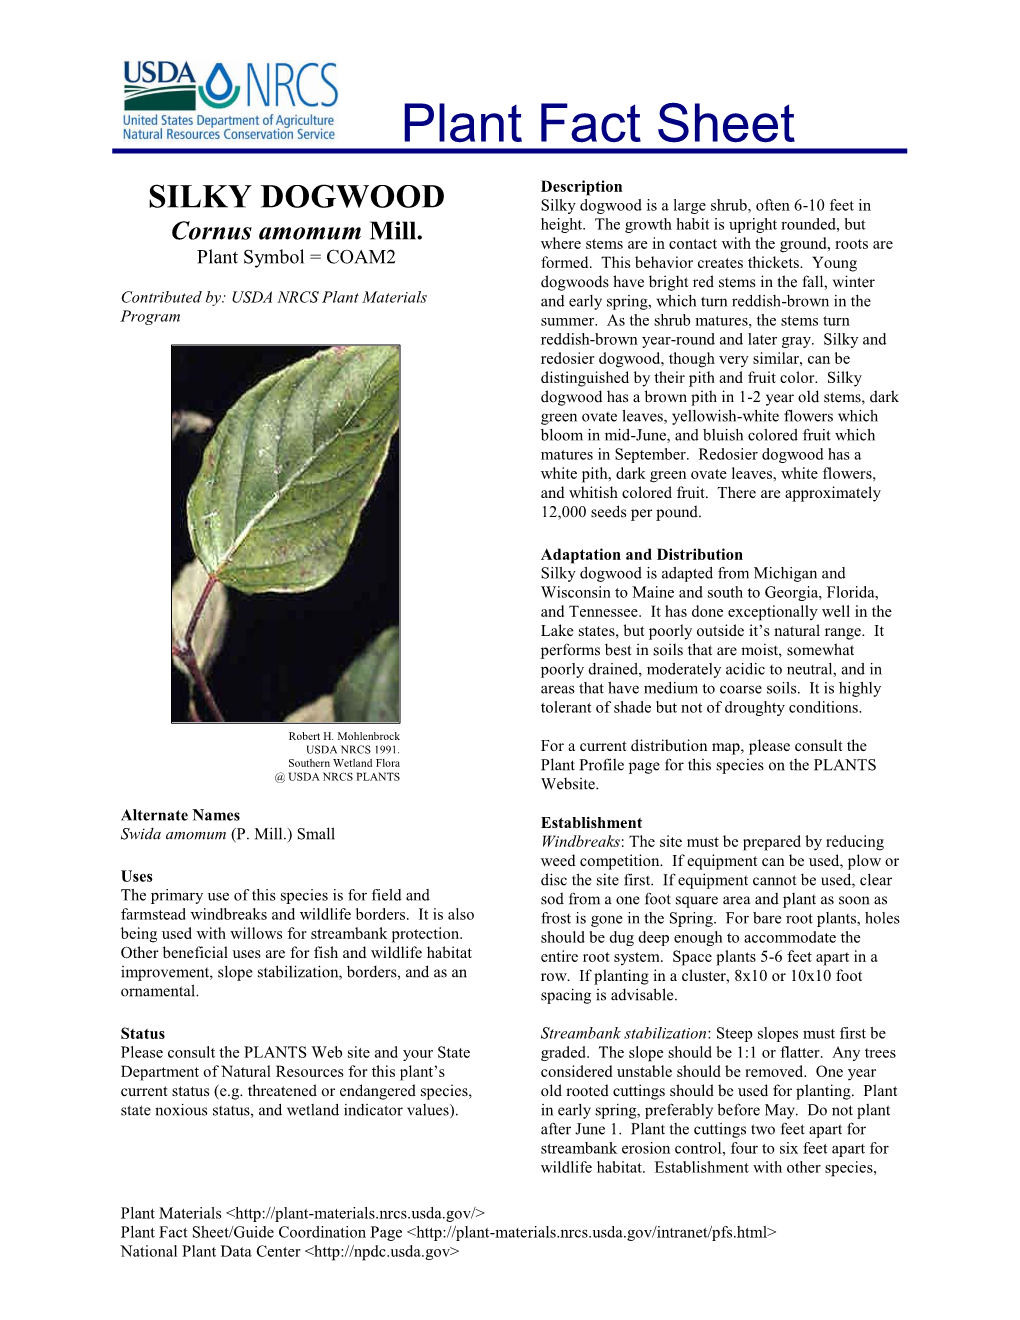 SILKY DOGWOOD Silky Dogwood Is a Large Shrub, Often 6-10 Feet in Height